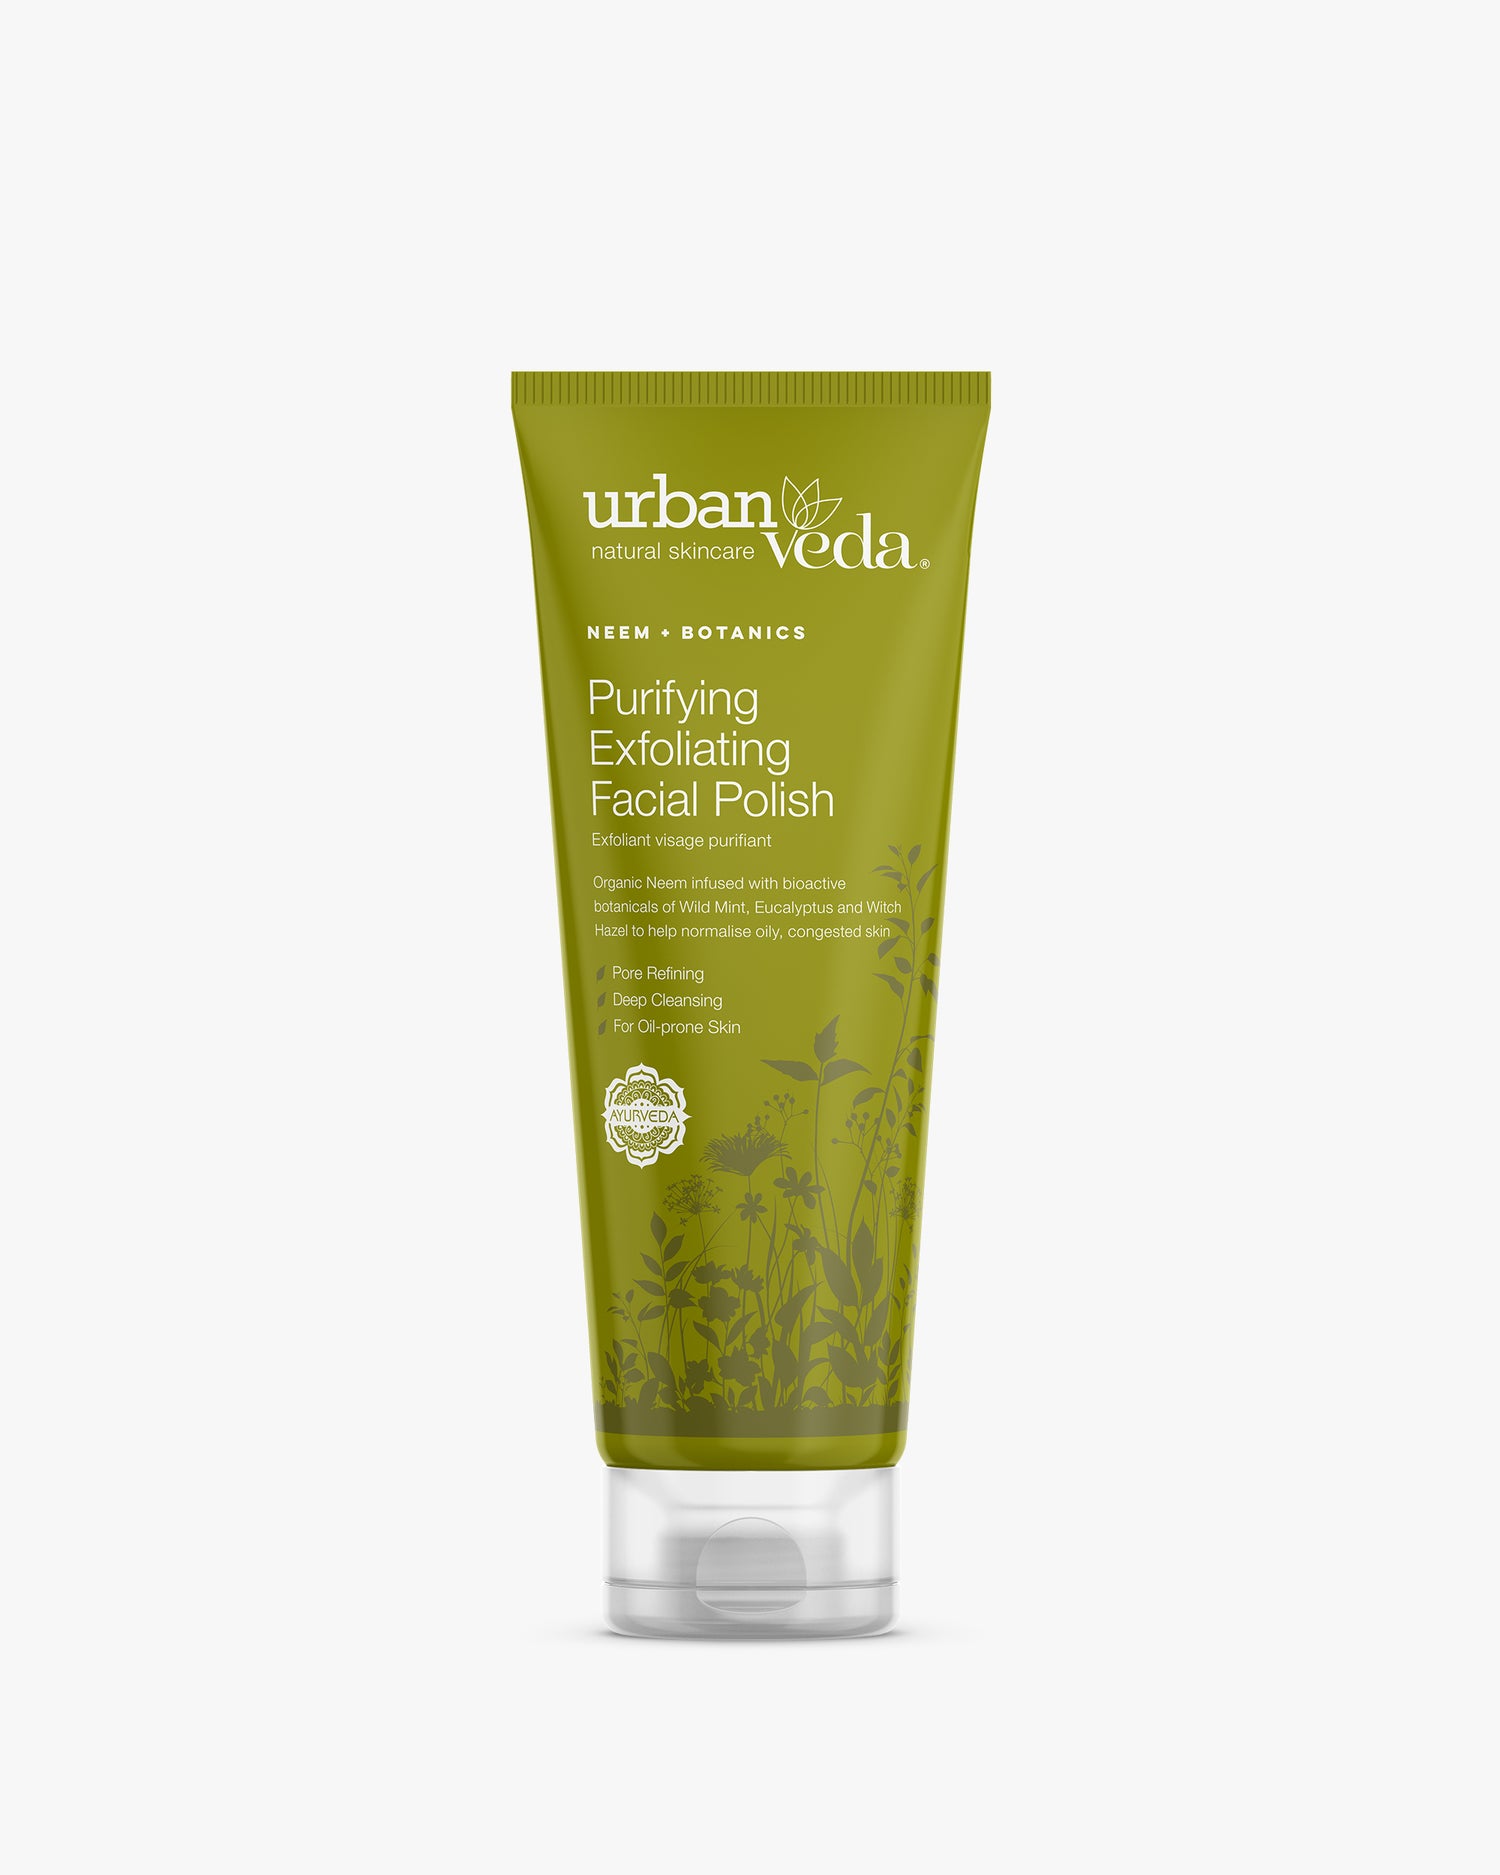 urban veda purifying exfoliating facial polish